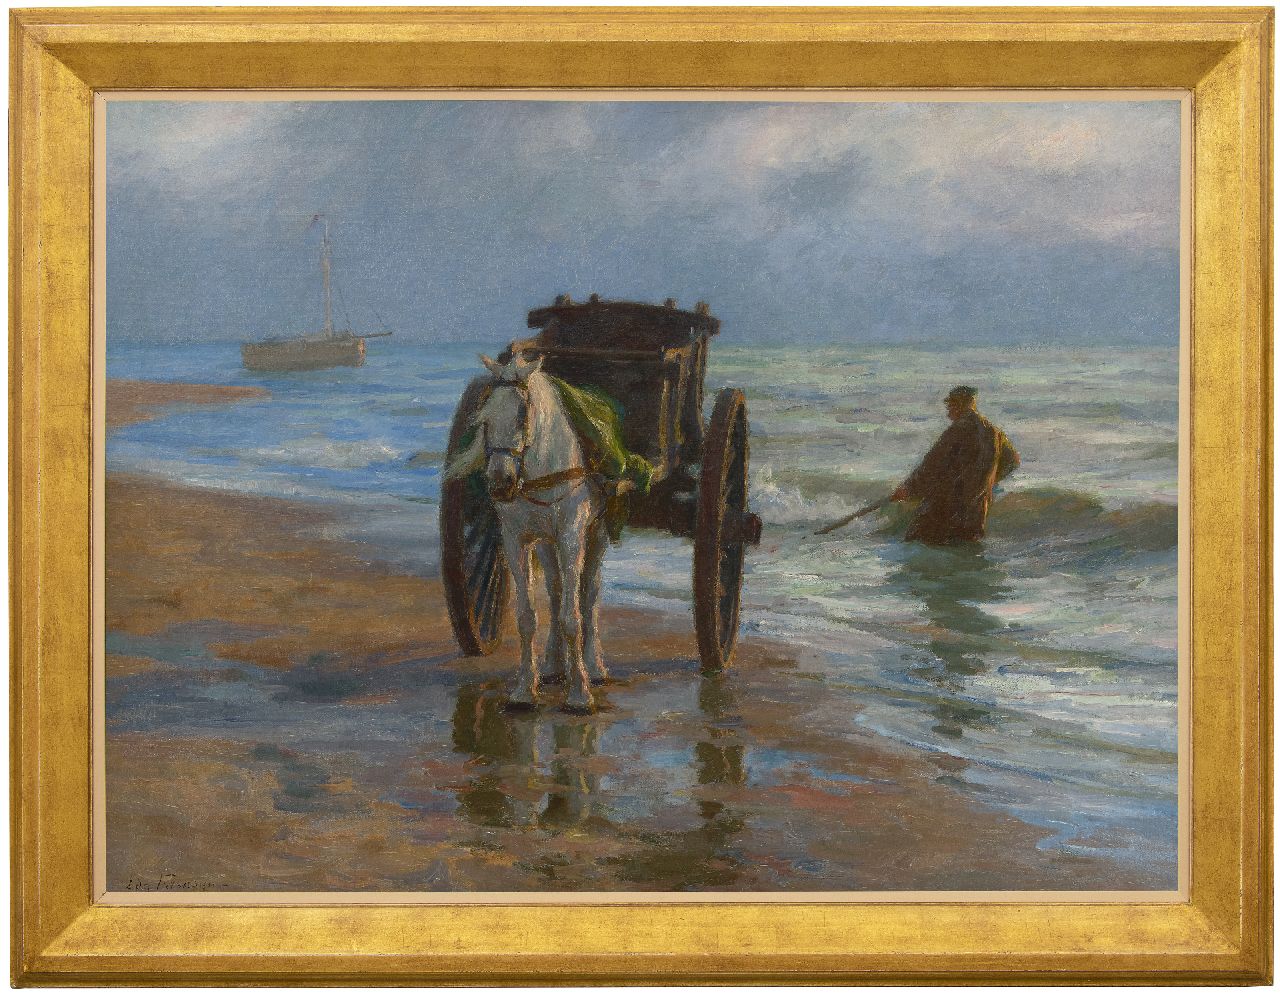 Farasijn E.  | Edgard Farasijn | Paintings offered for sale | Shellfishing along the North Sea coast, oil on canvas 88.2 x 120.7 cm, signed l.l.